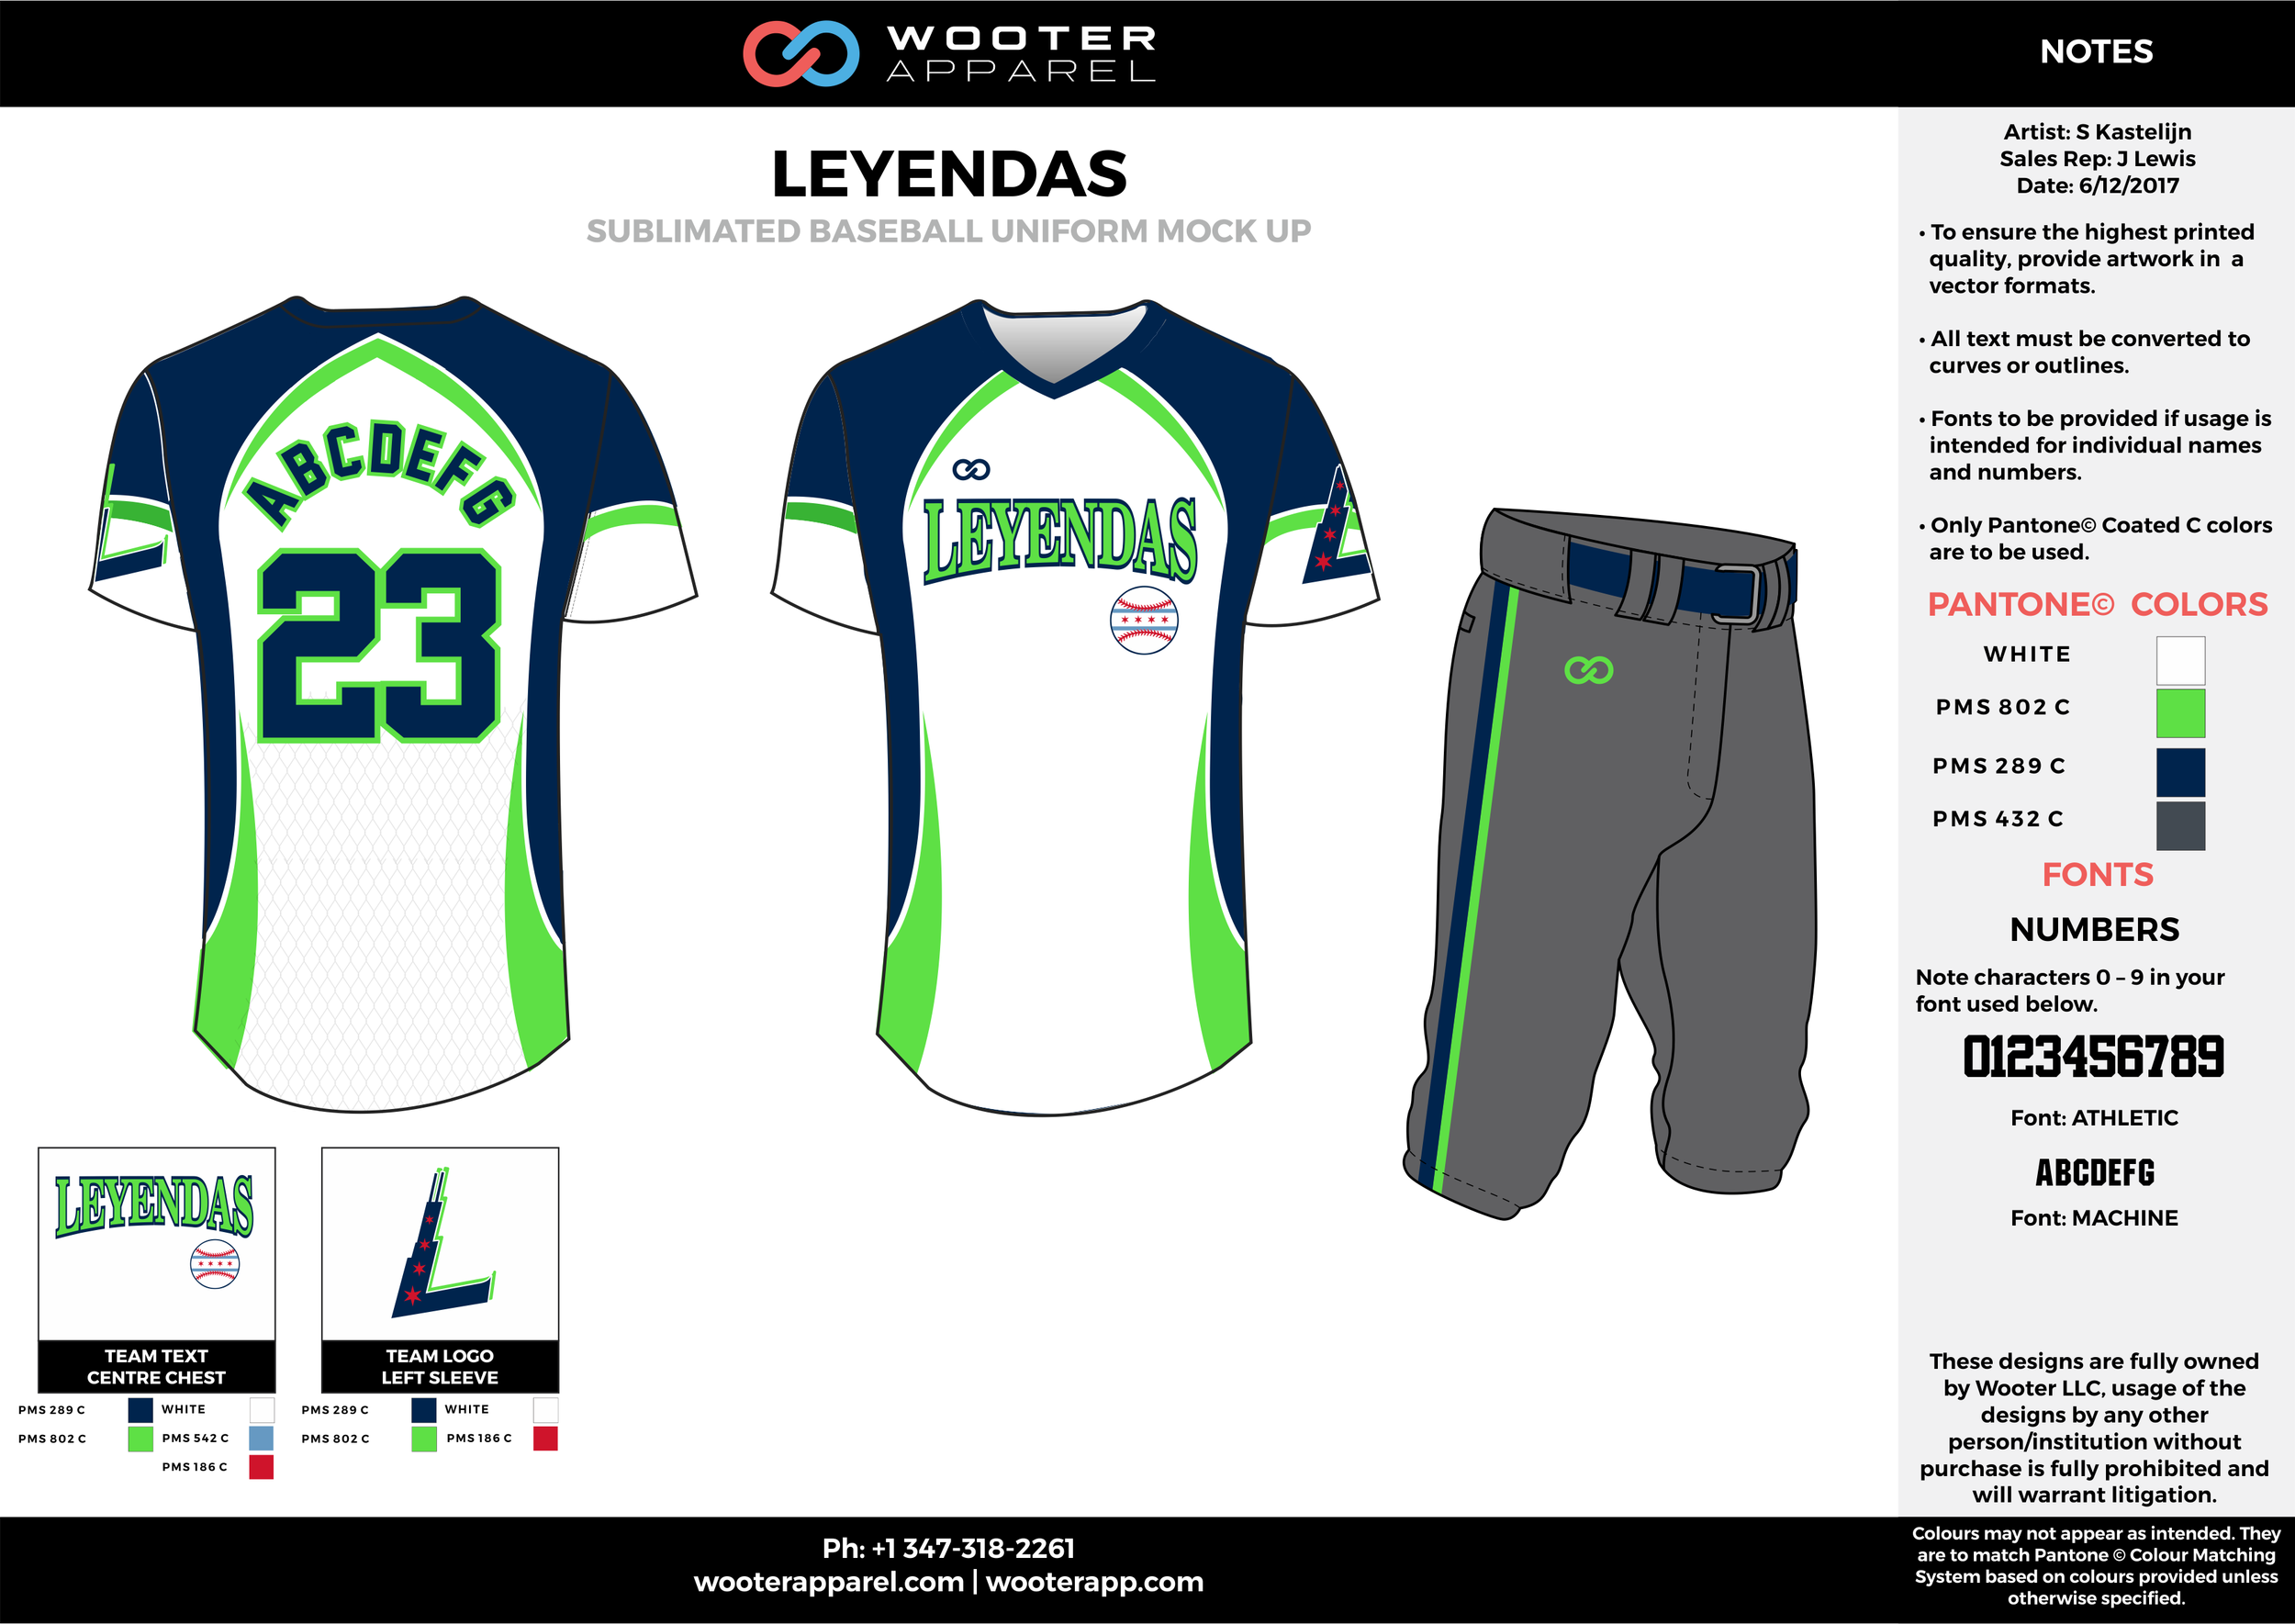 Custom Softball Uniforms – Stinger Sports